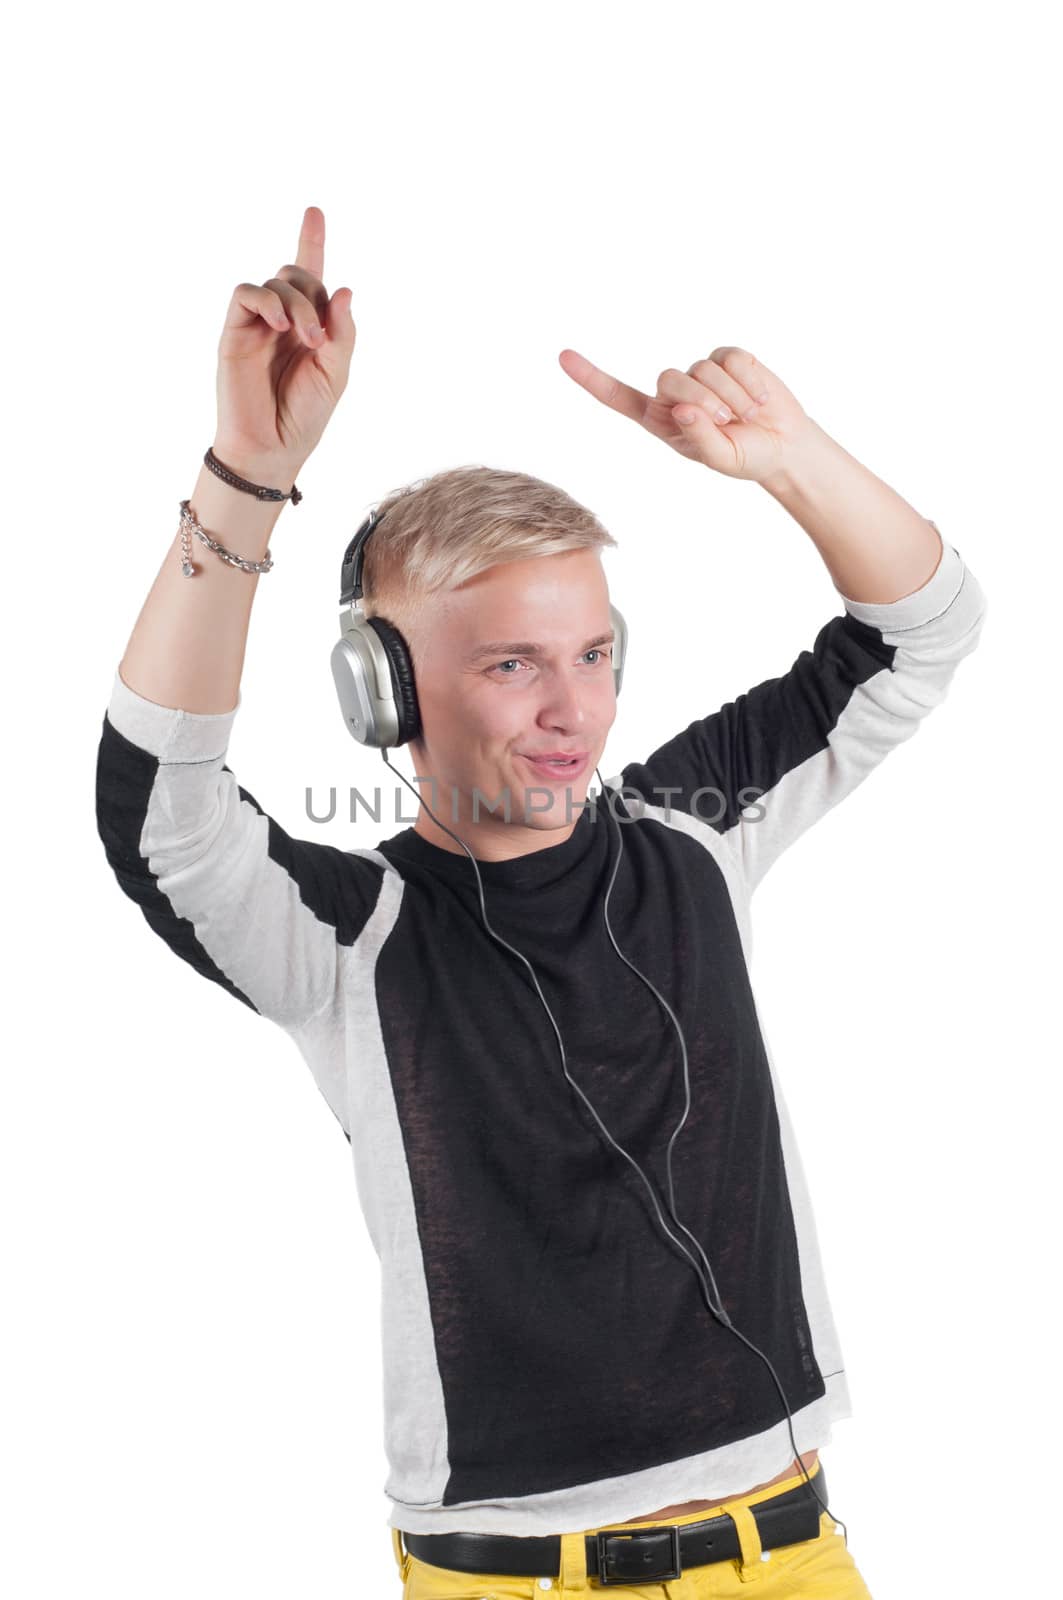 Man in headphones dancing by anytka